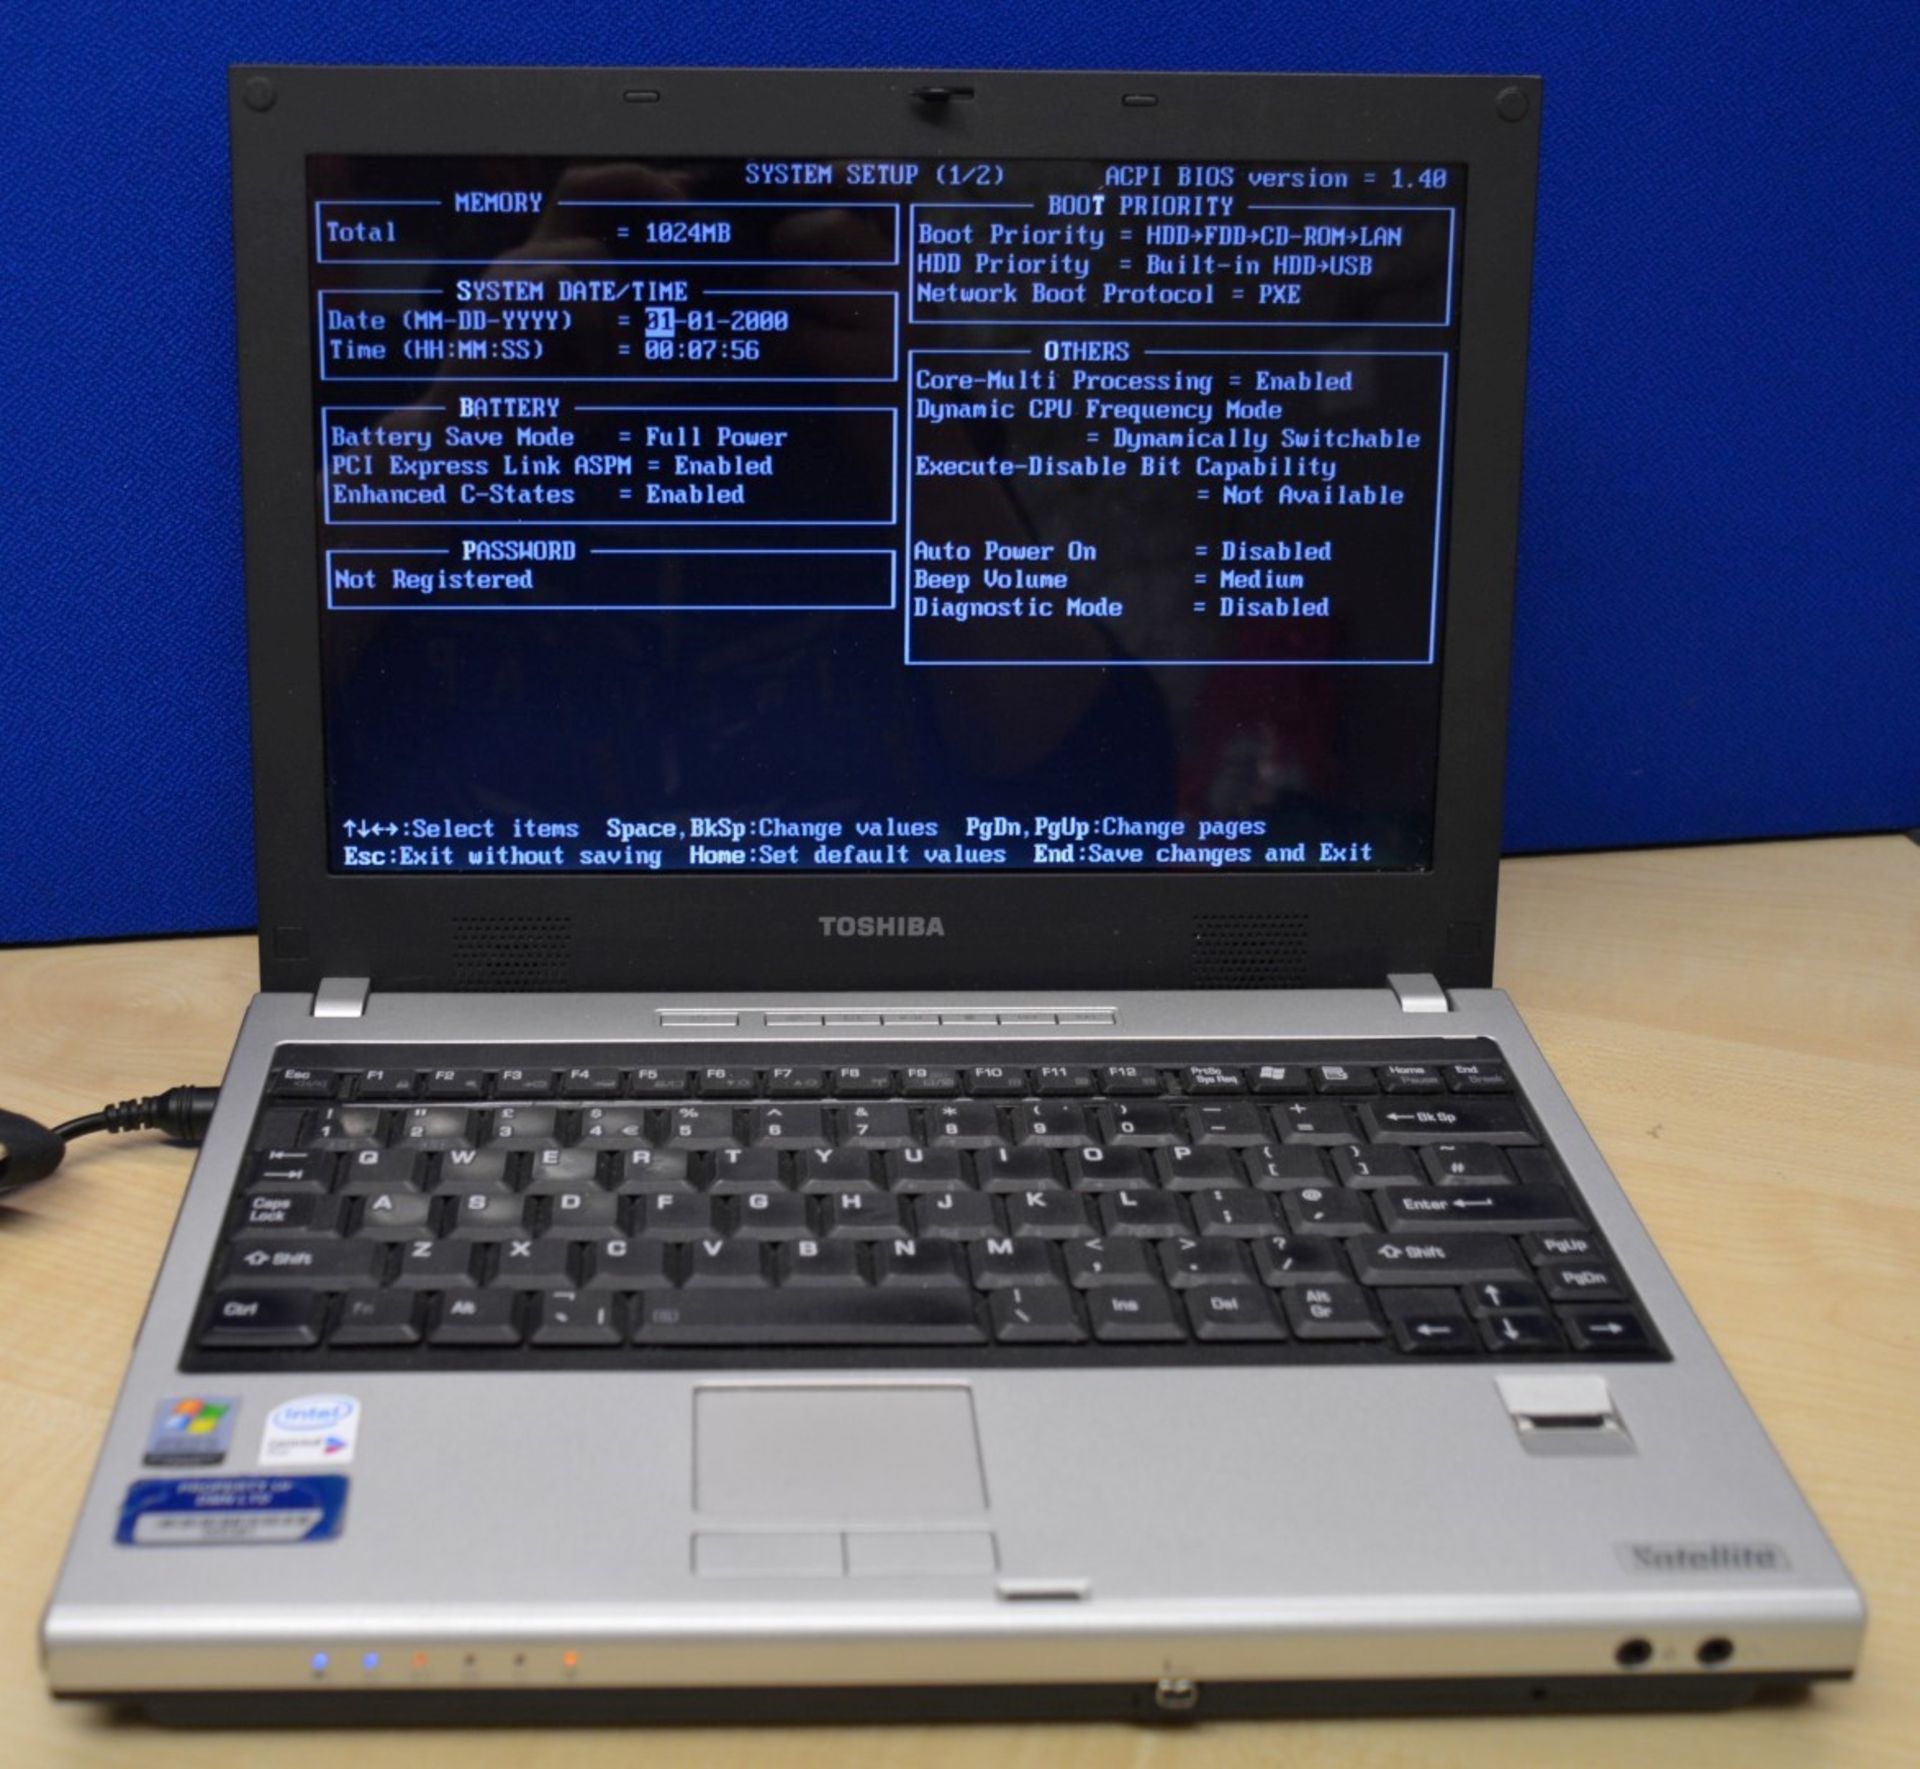 1 x Toshiba U200 Laptop Computer - 12.1 Inch Screen Size - Features Intel Centrino Duo Processor,